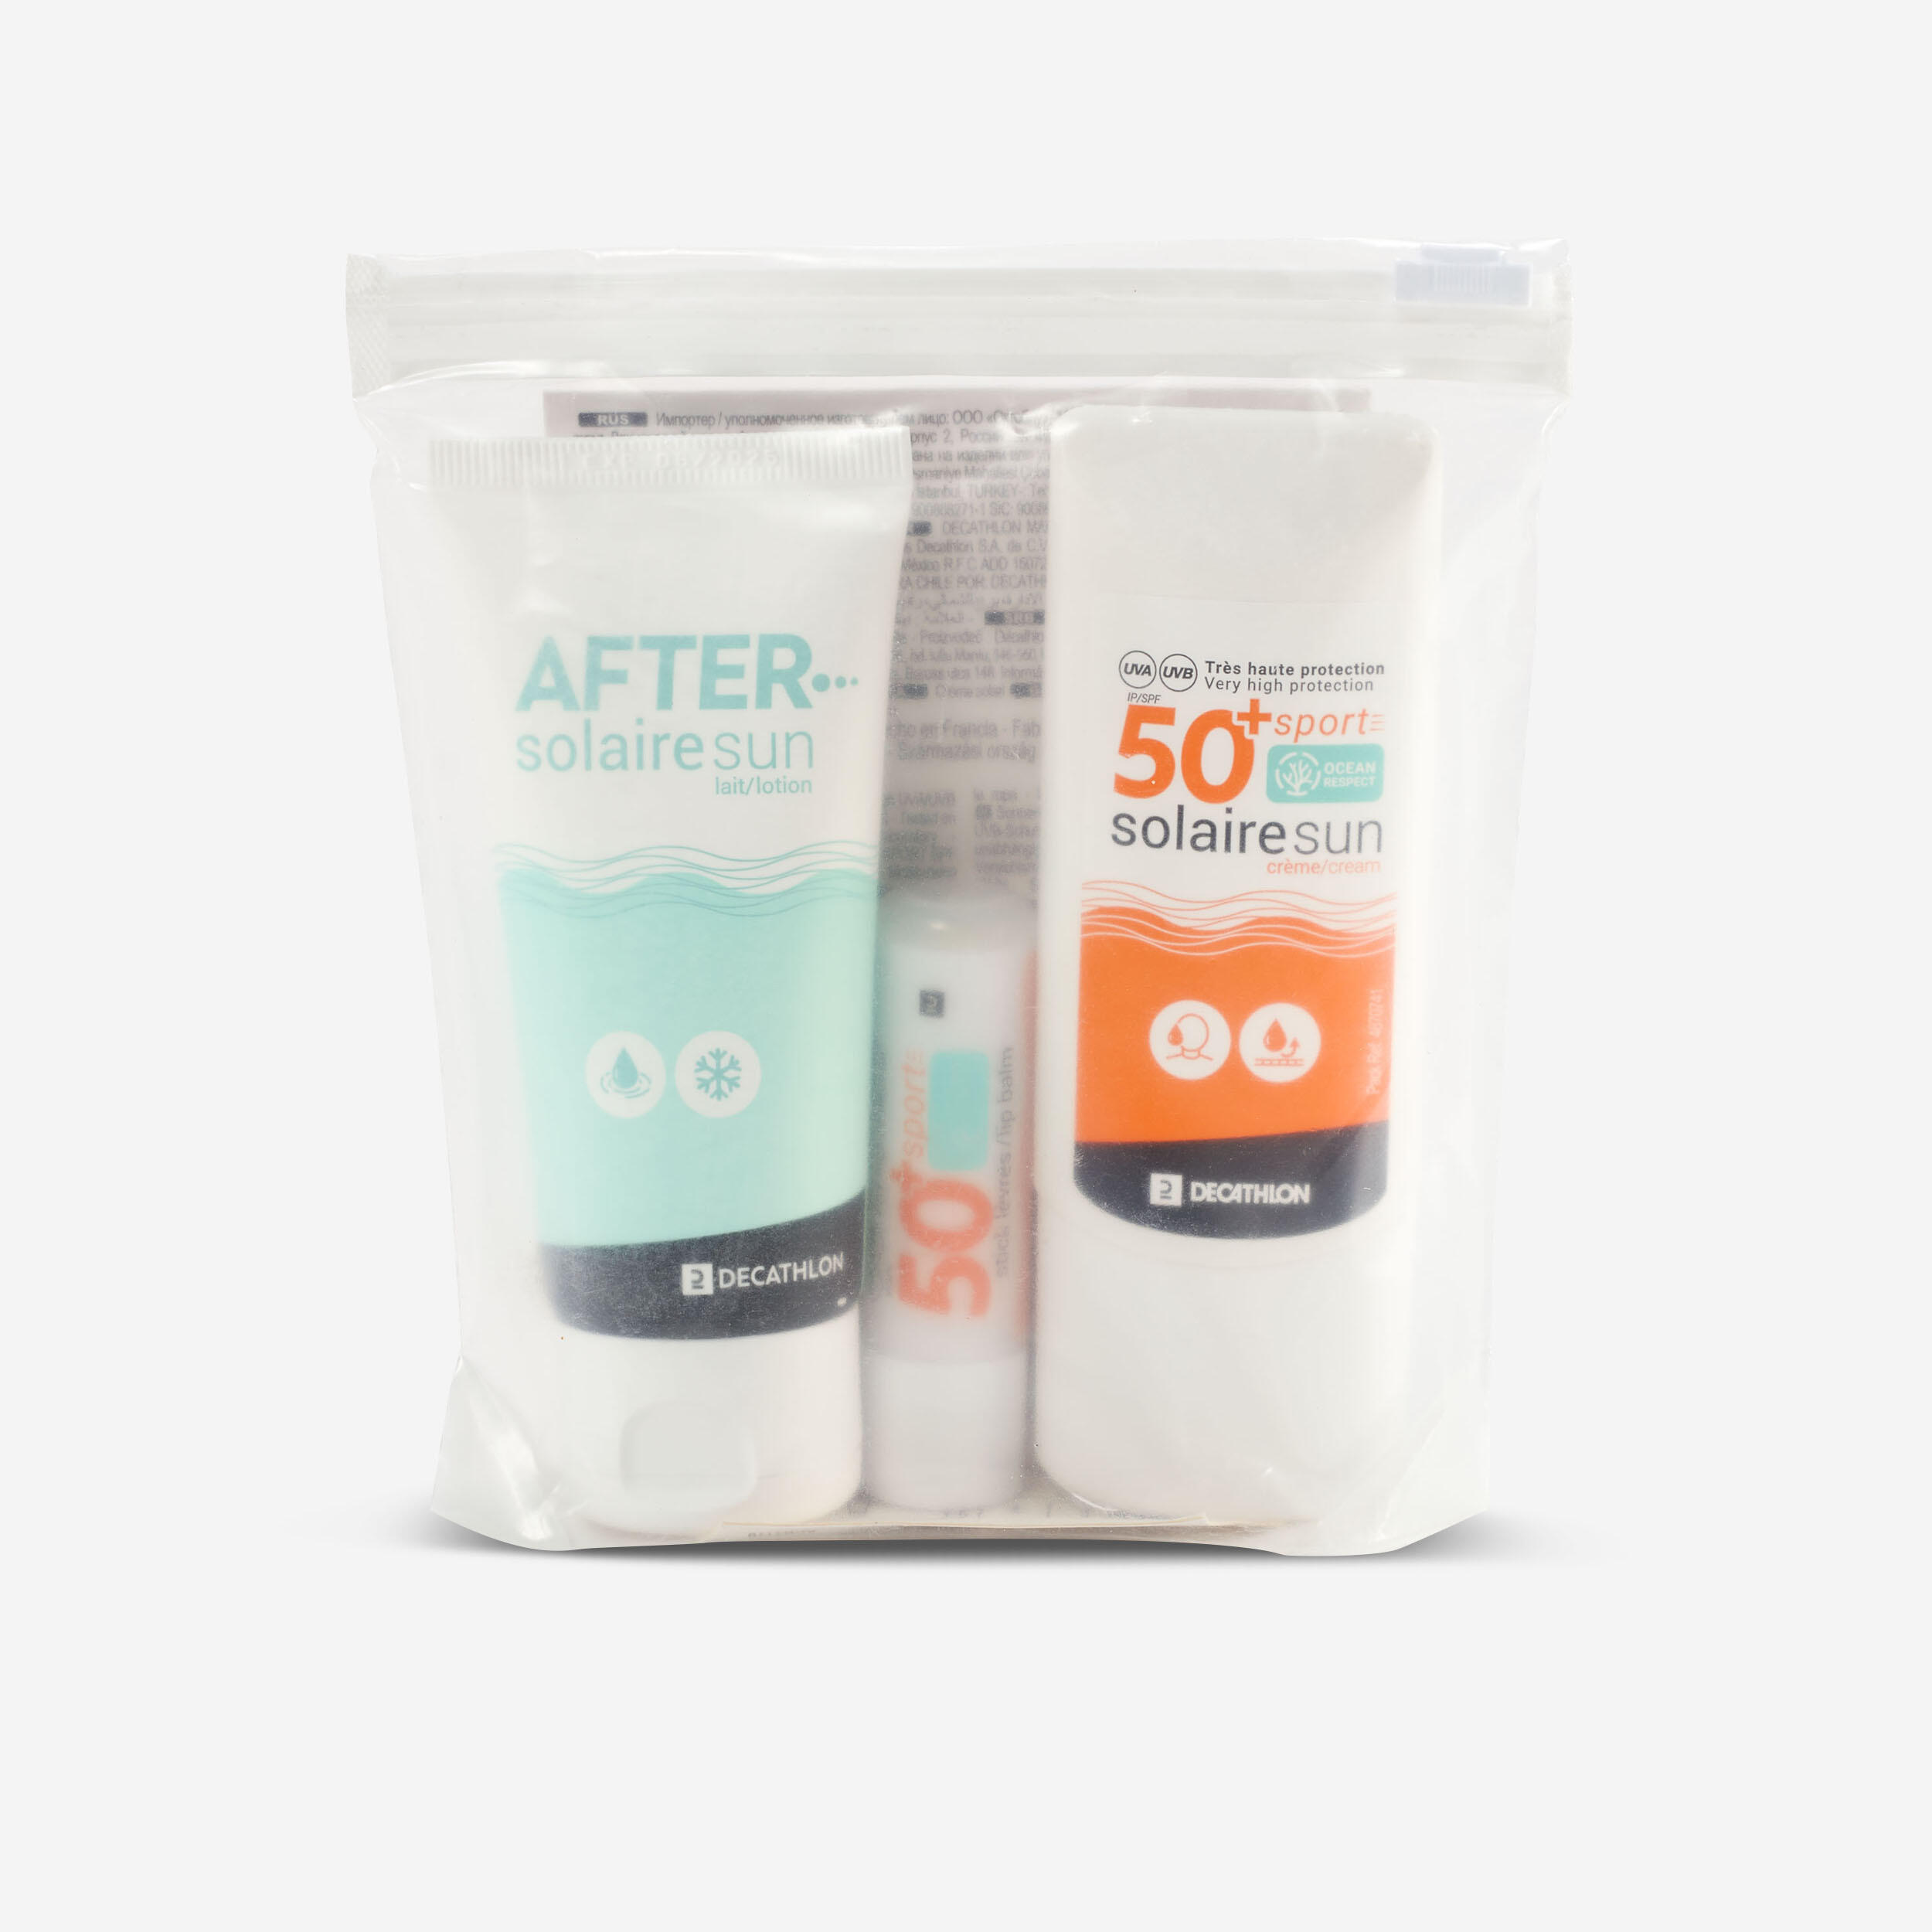 Sun kit: SPF 50+ cream / SPF 50+ lip stick / After-sun lotion 1/6